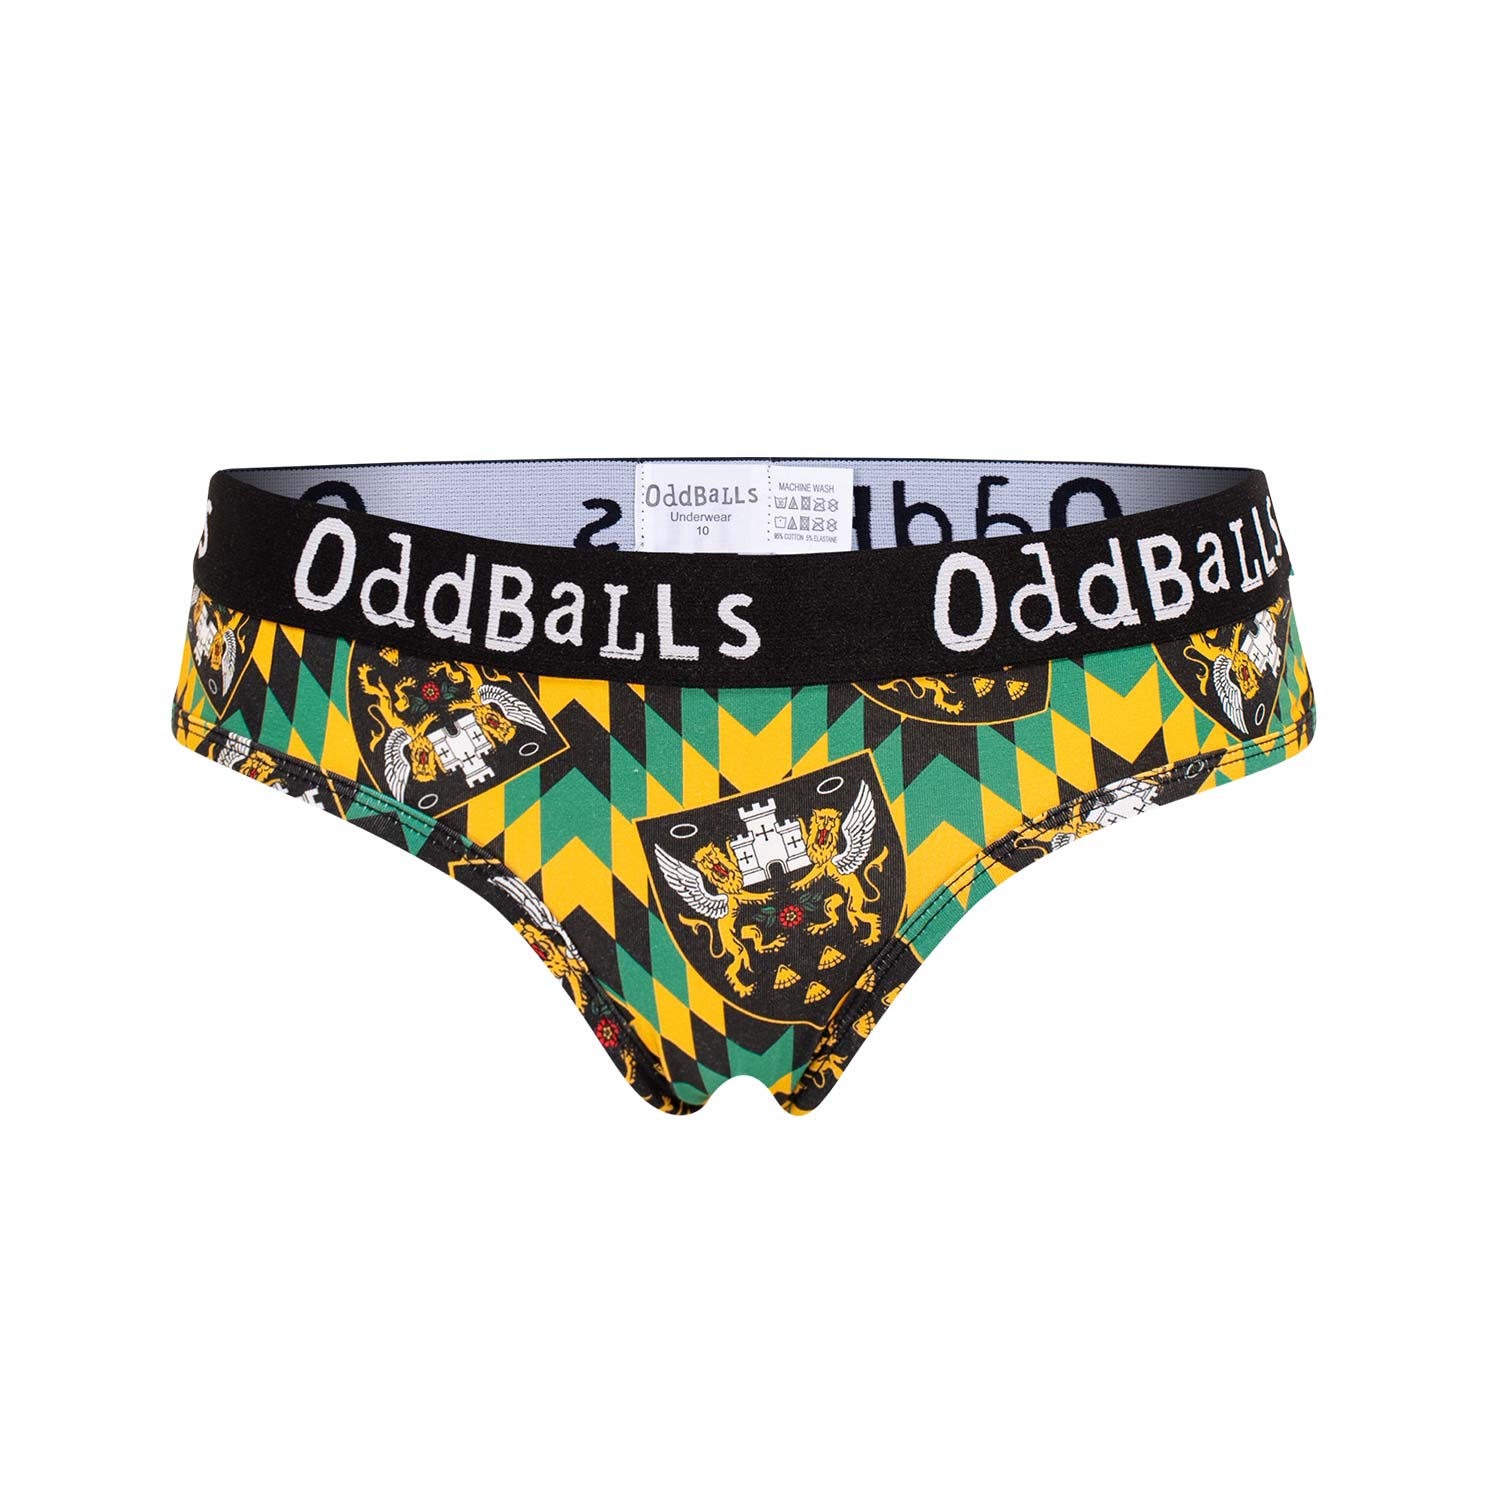 OddBalls - Ladies Bralette Subscription